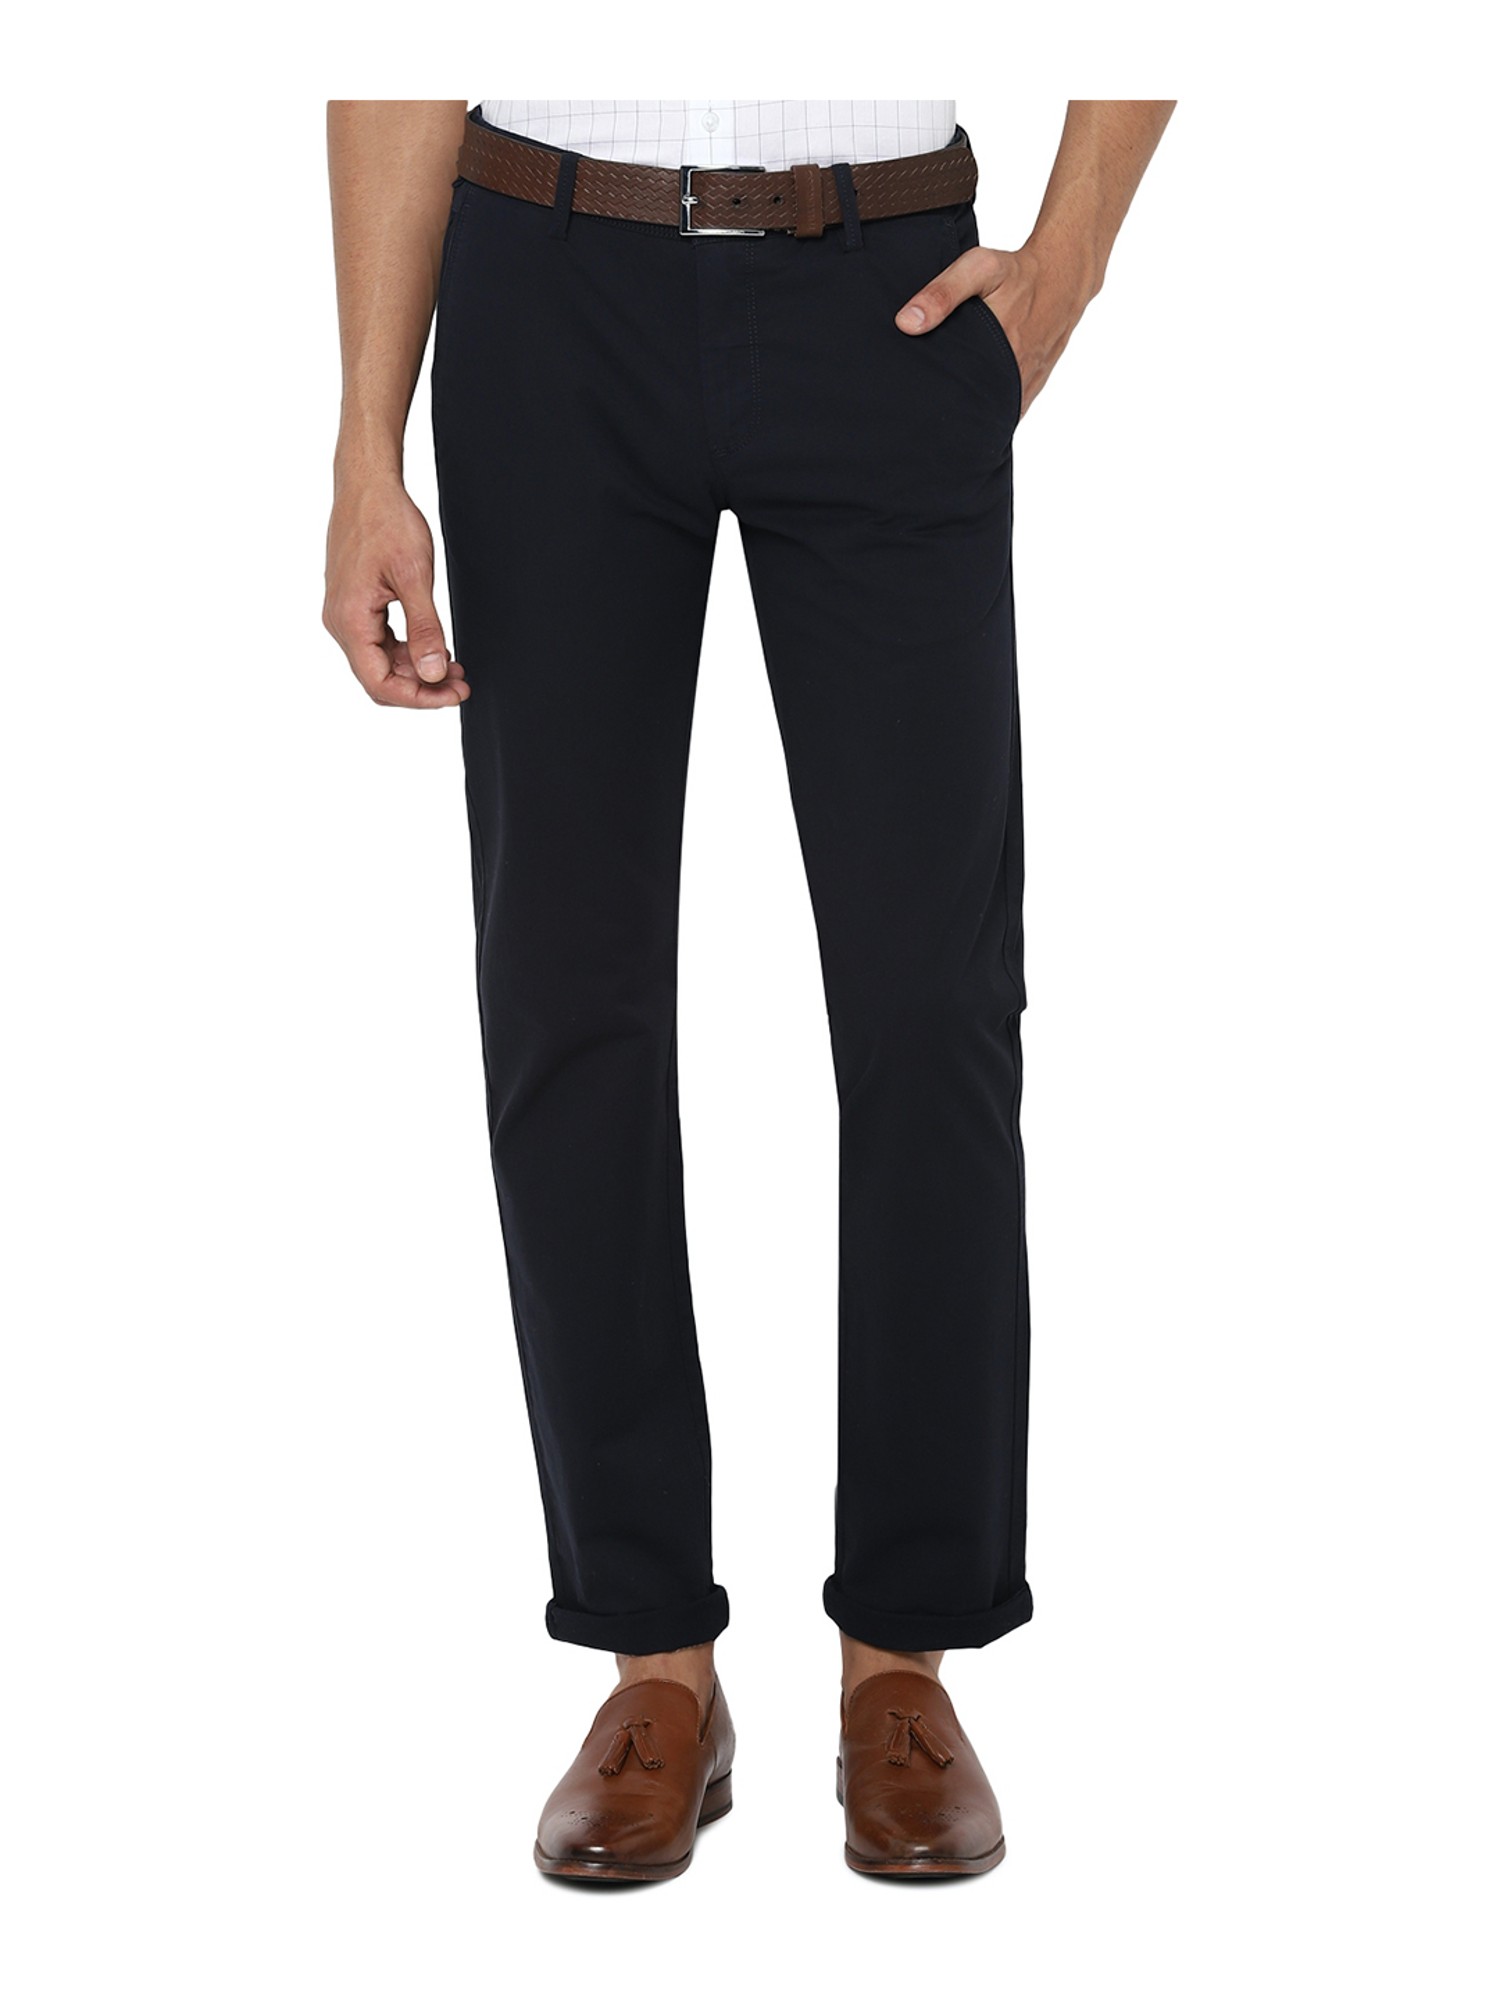 Buy Men Black Slim Fit Solid Casual Trousers Online  718105  Allen Solly